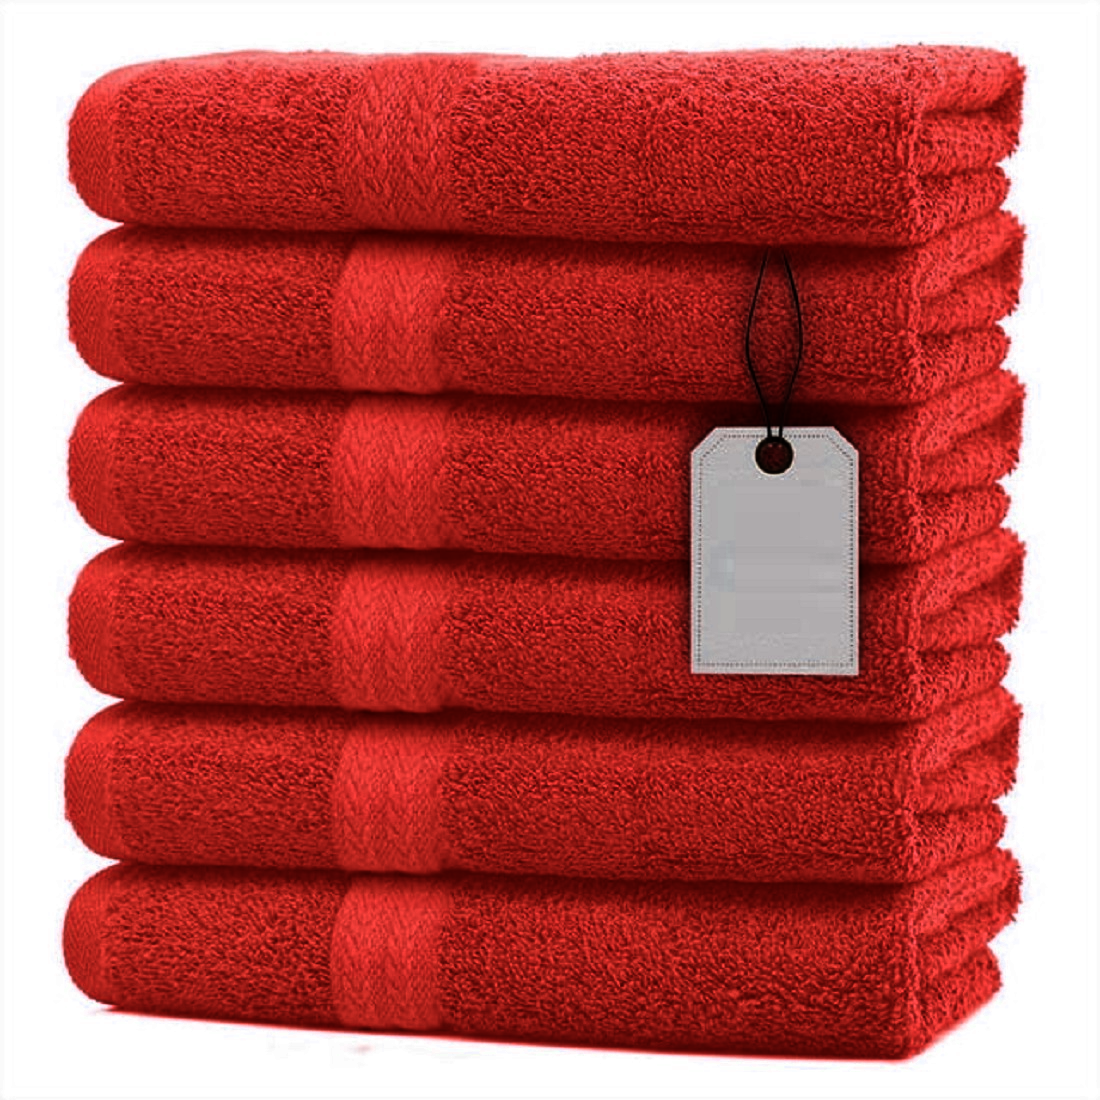 Pack of 3 & 6 Big Bath Sheets 100% Cotton Large Size Bathroom Towels